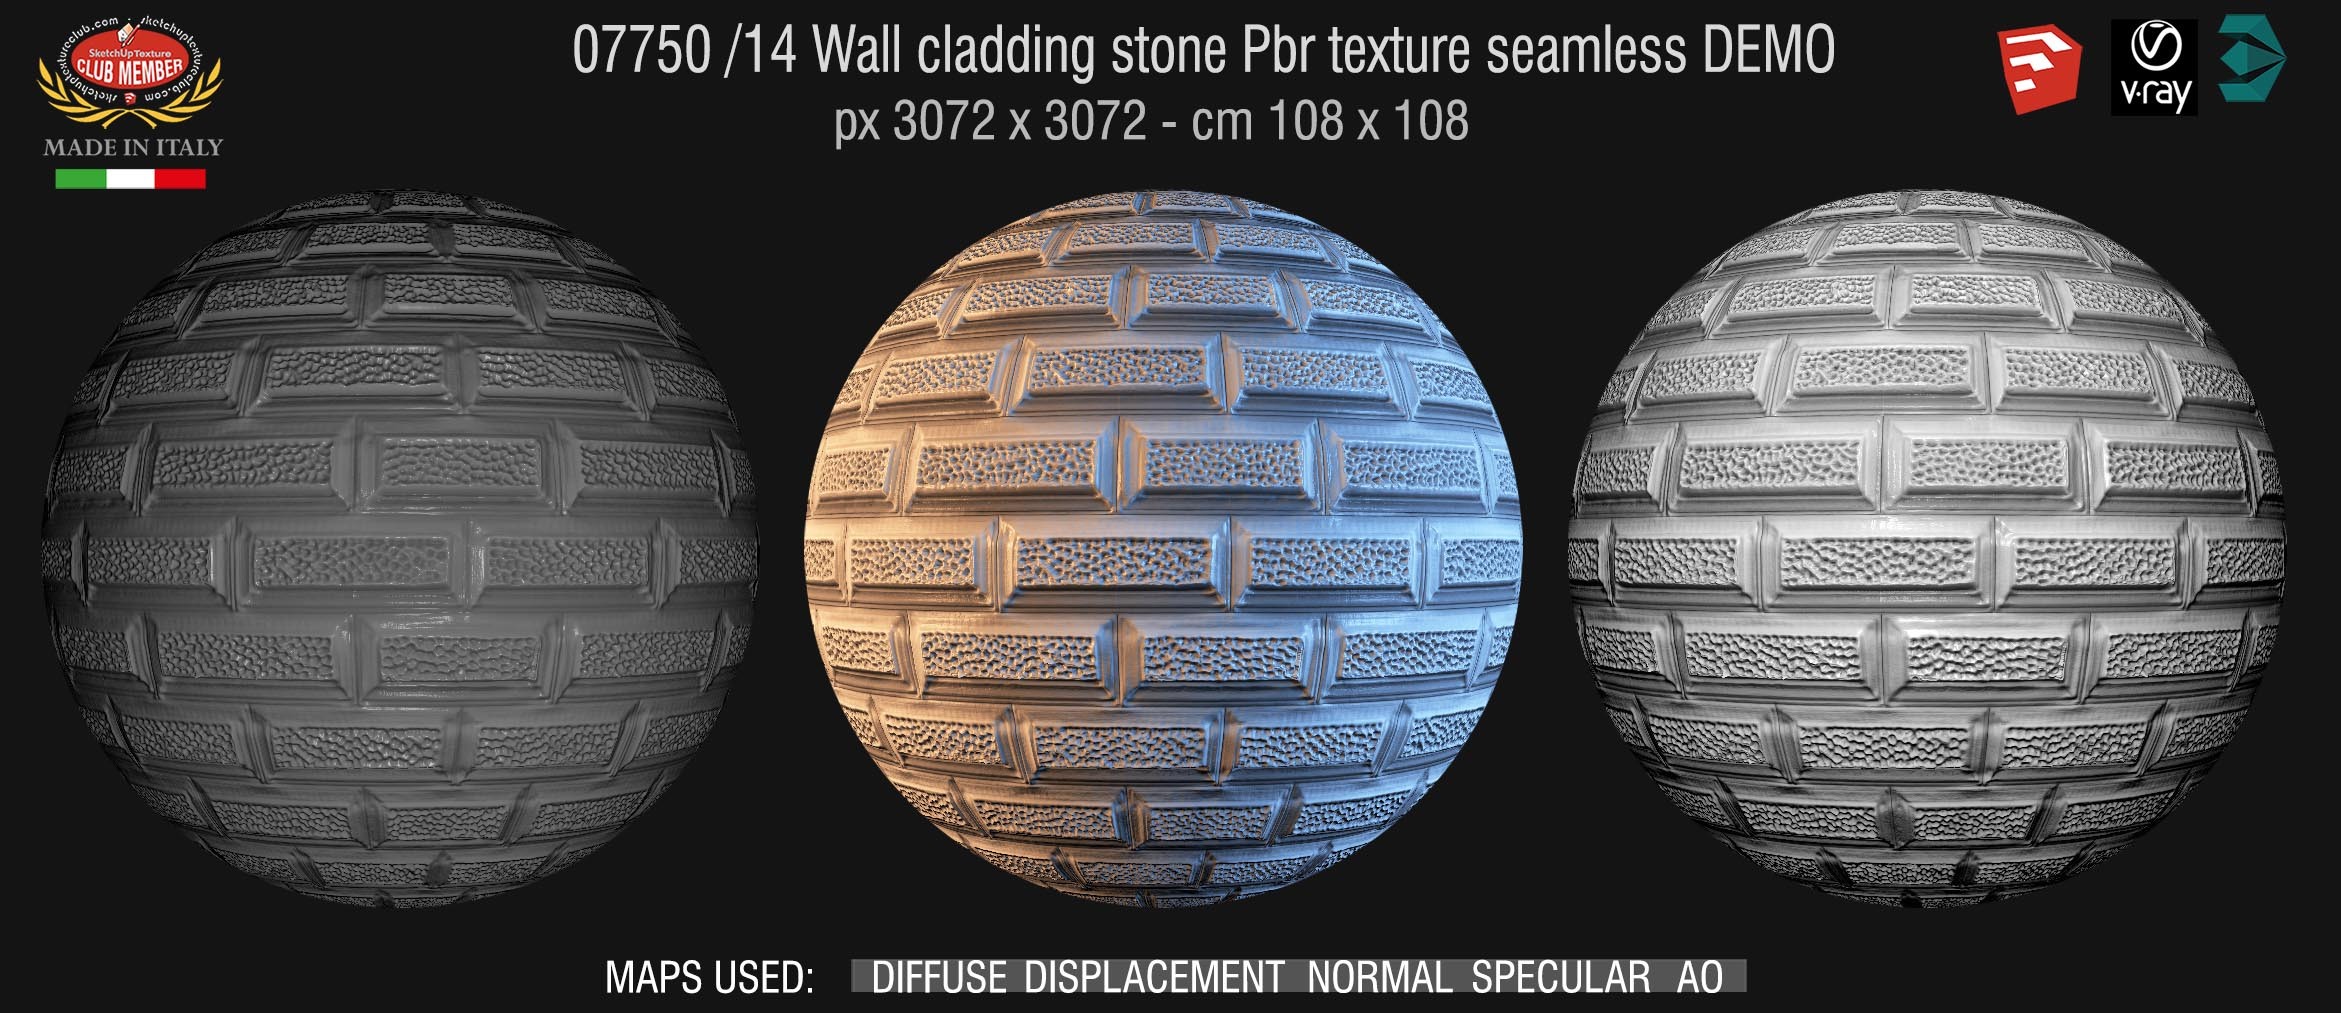 07750/14 Wall cladding stone pbr texture seamless demo